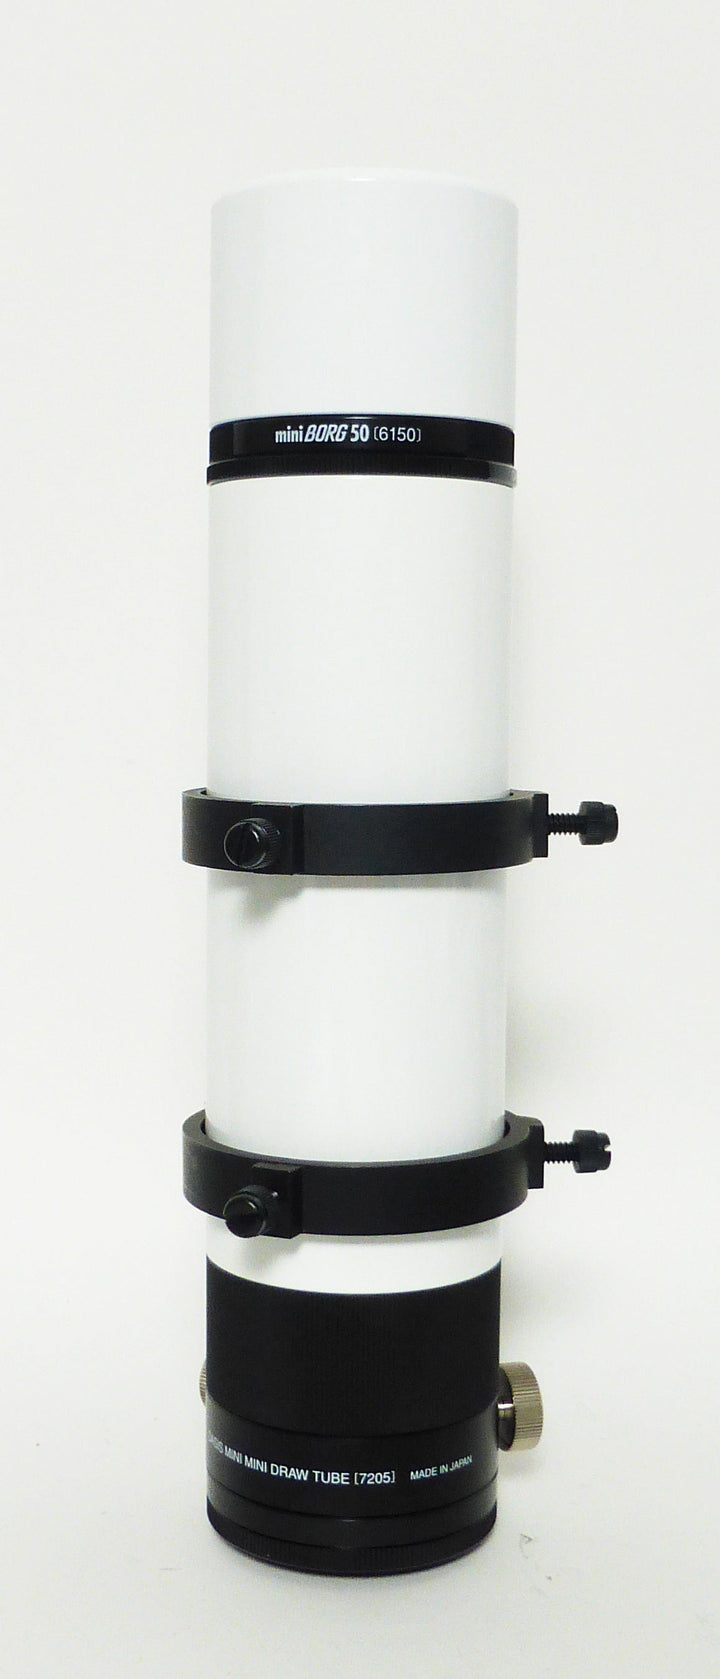 Oasis Mini Borg 50 with Mini Mini Draw Tube and More Telescopes and Accessories Borg 6150